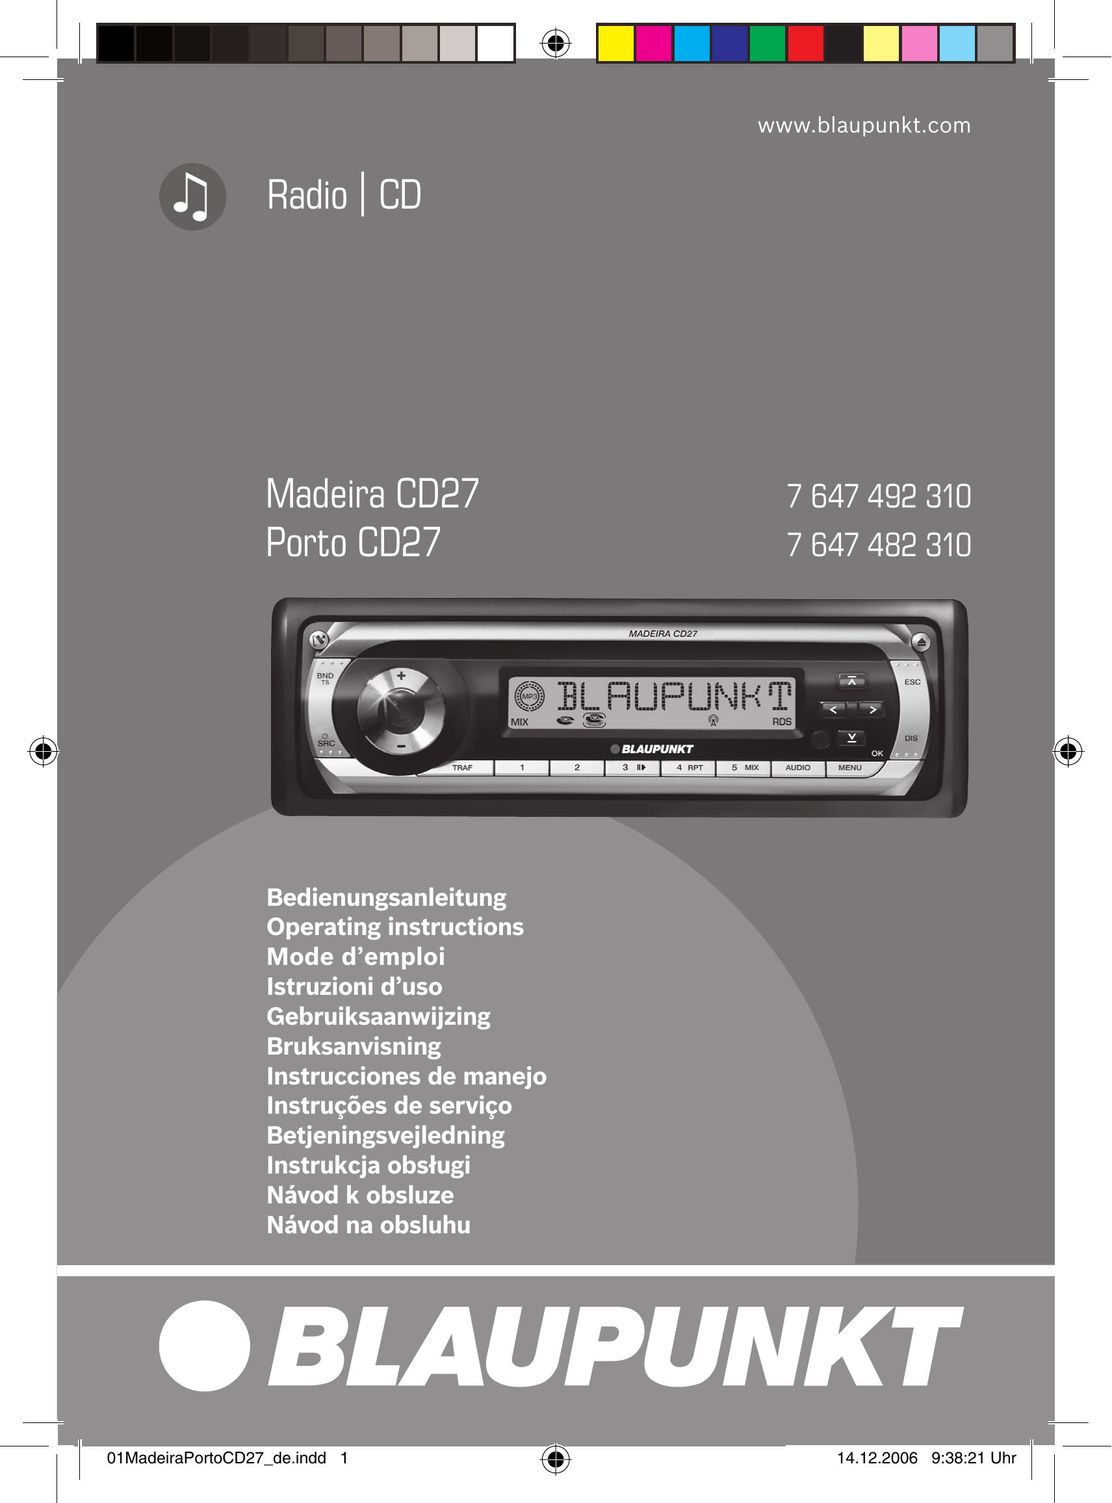 Blaupunkt 7 647 482 310 Car Stereo System User Manual